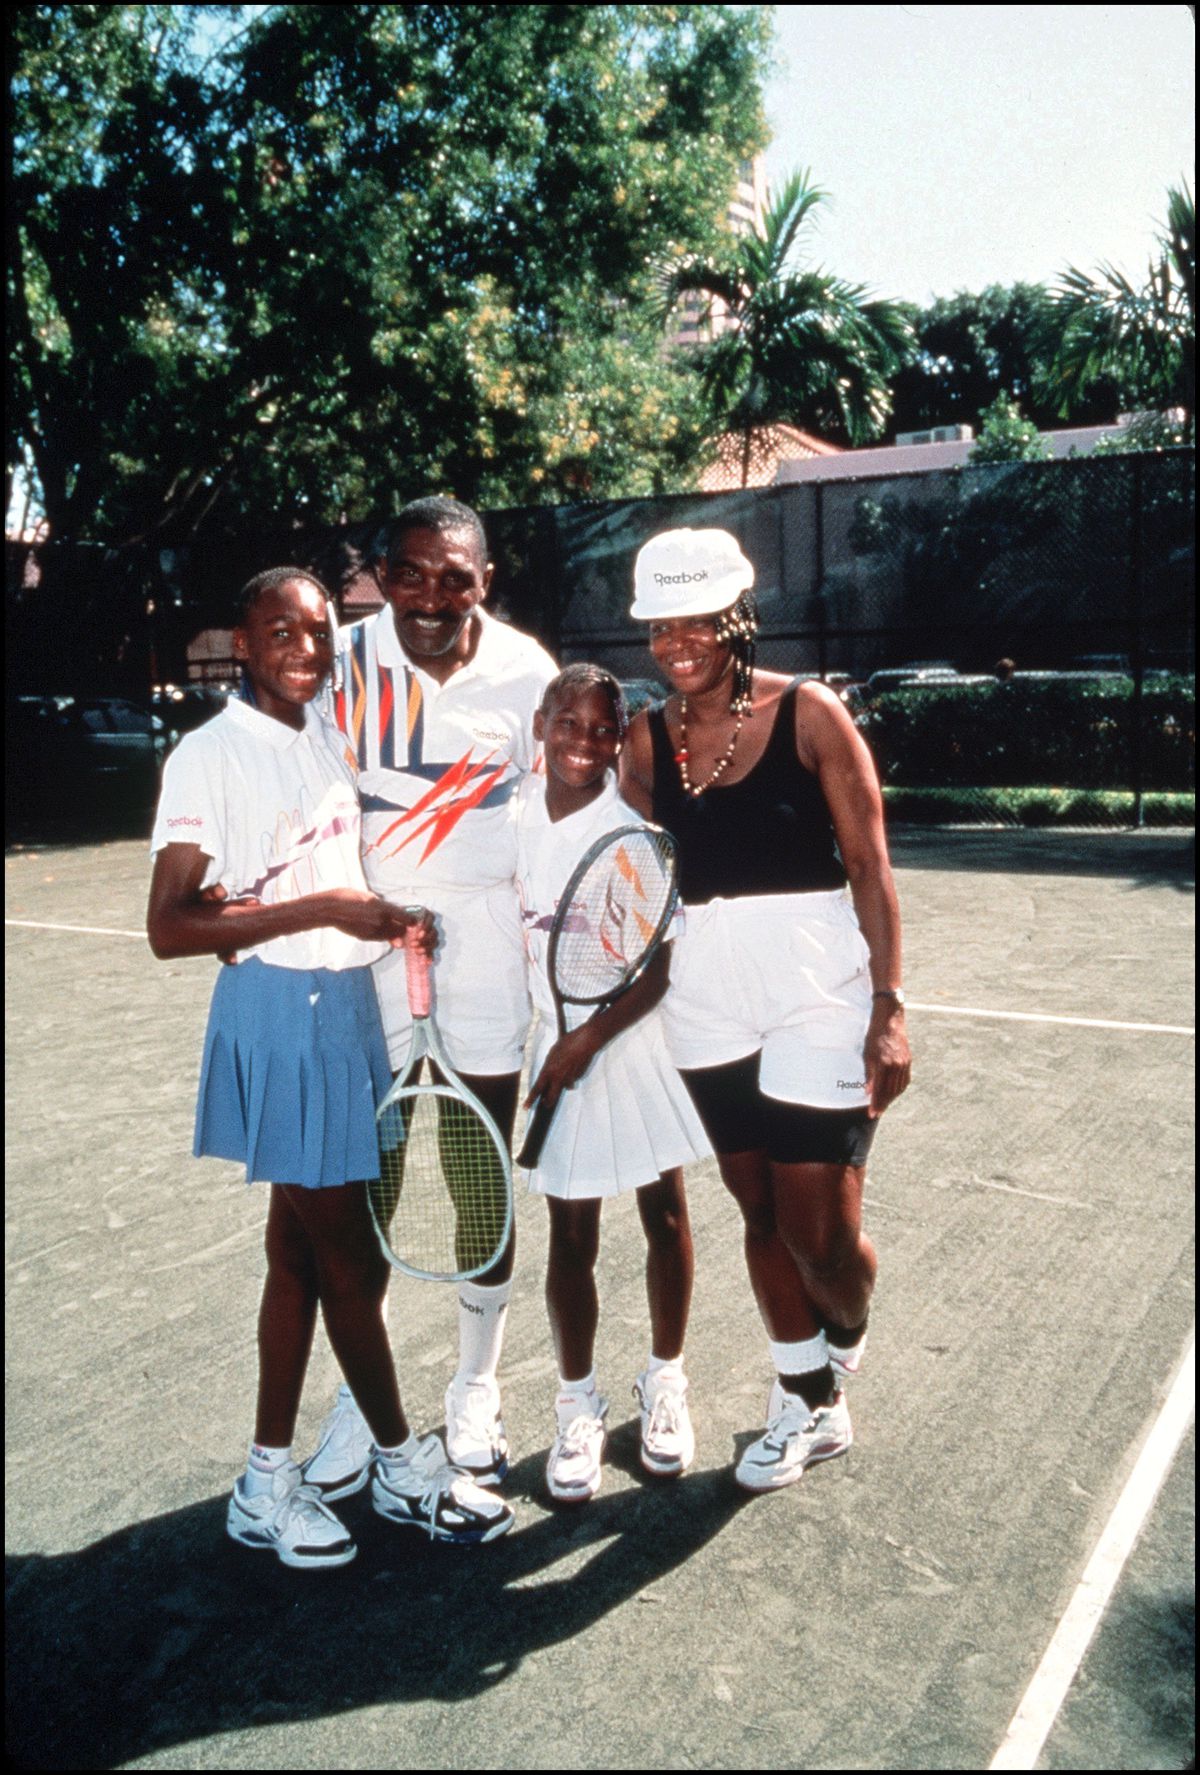 Serena and Venus Williams, file pictures.